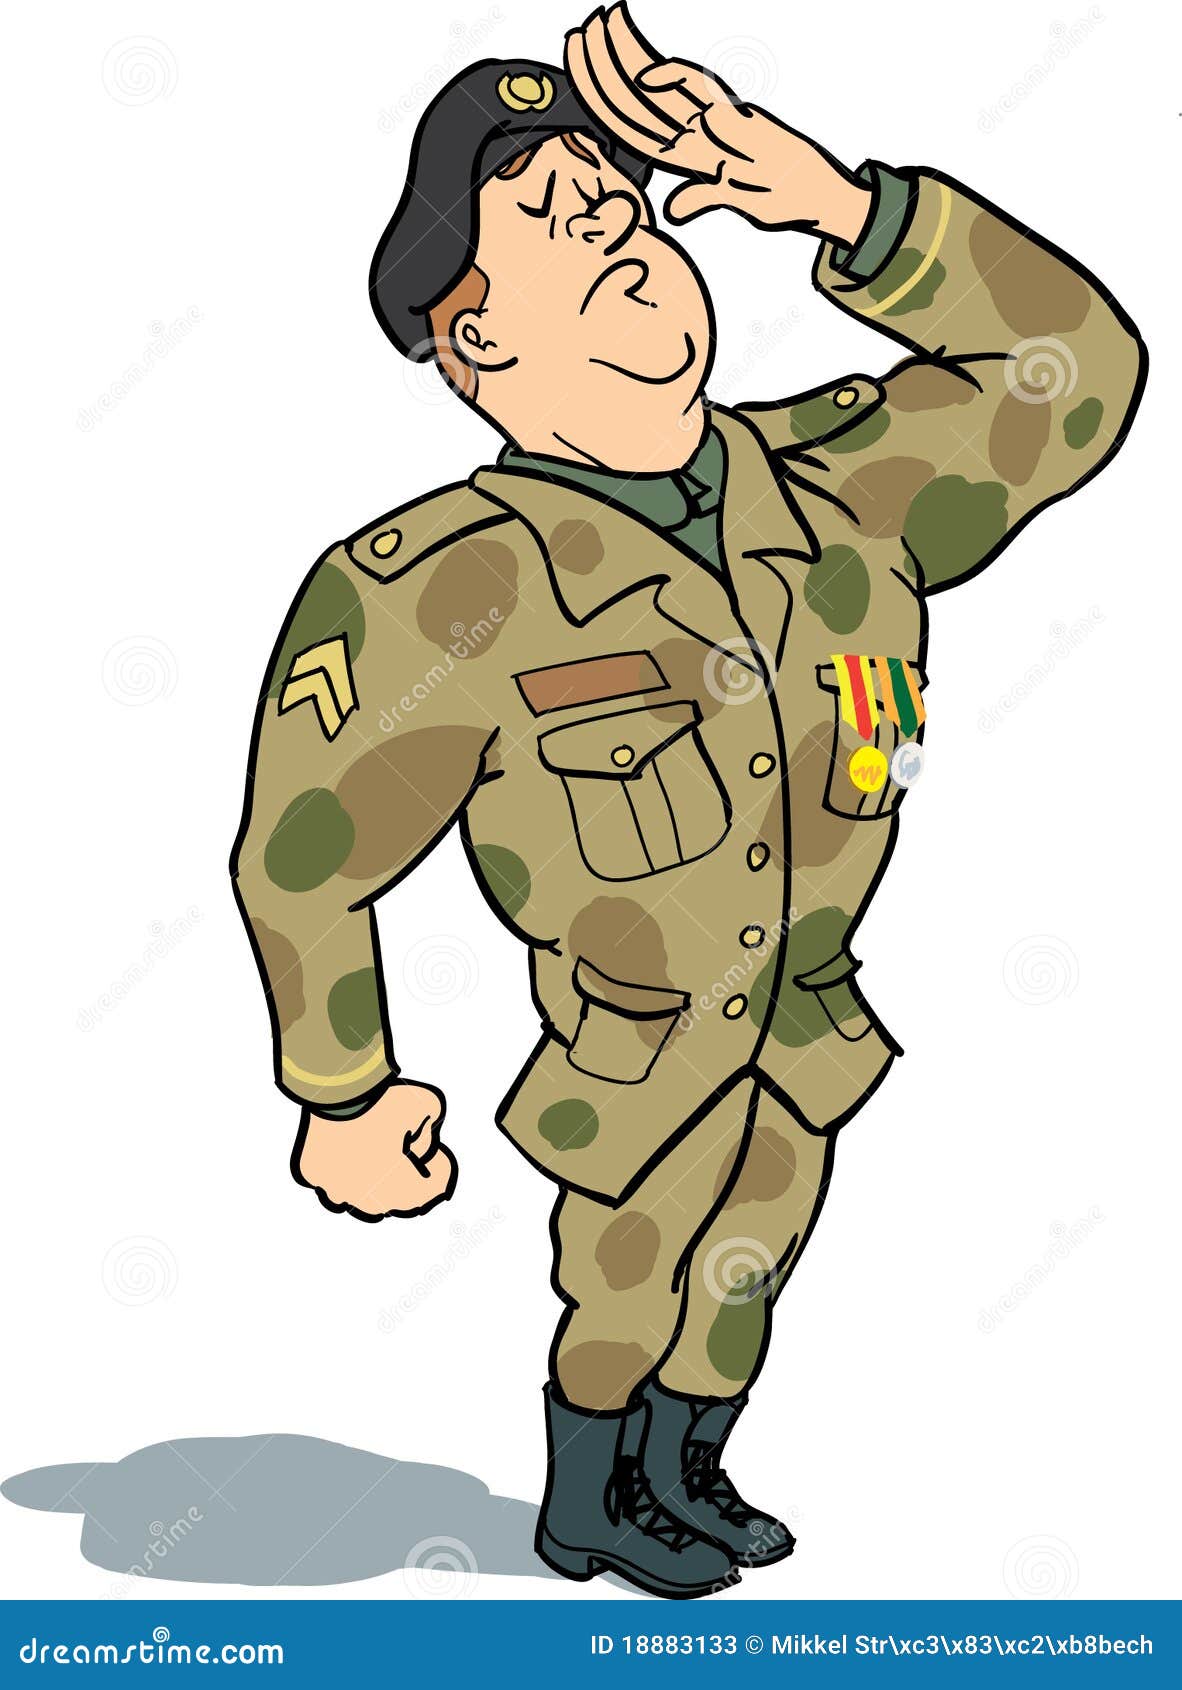 Soldier Saluting Stock Photos - Image: 18883133